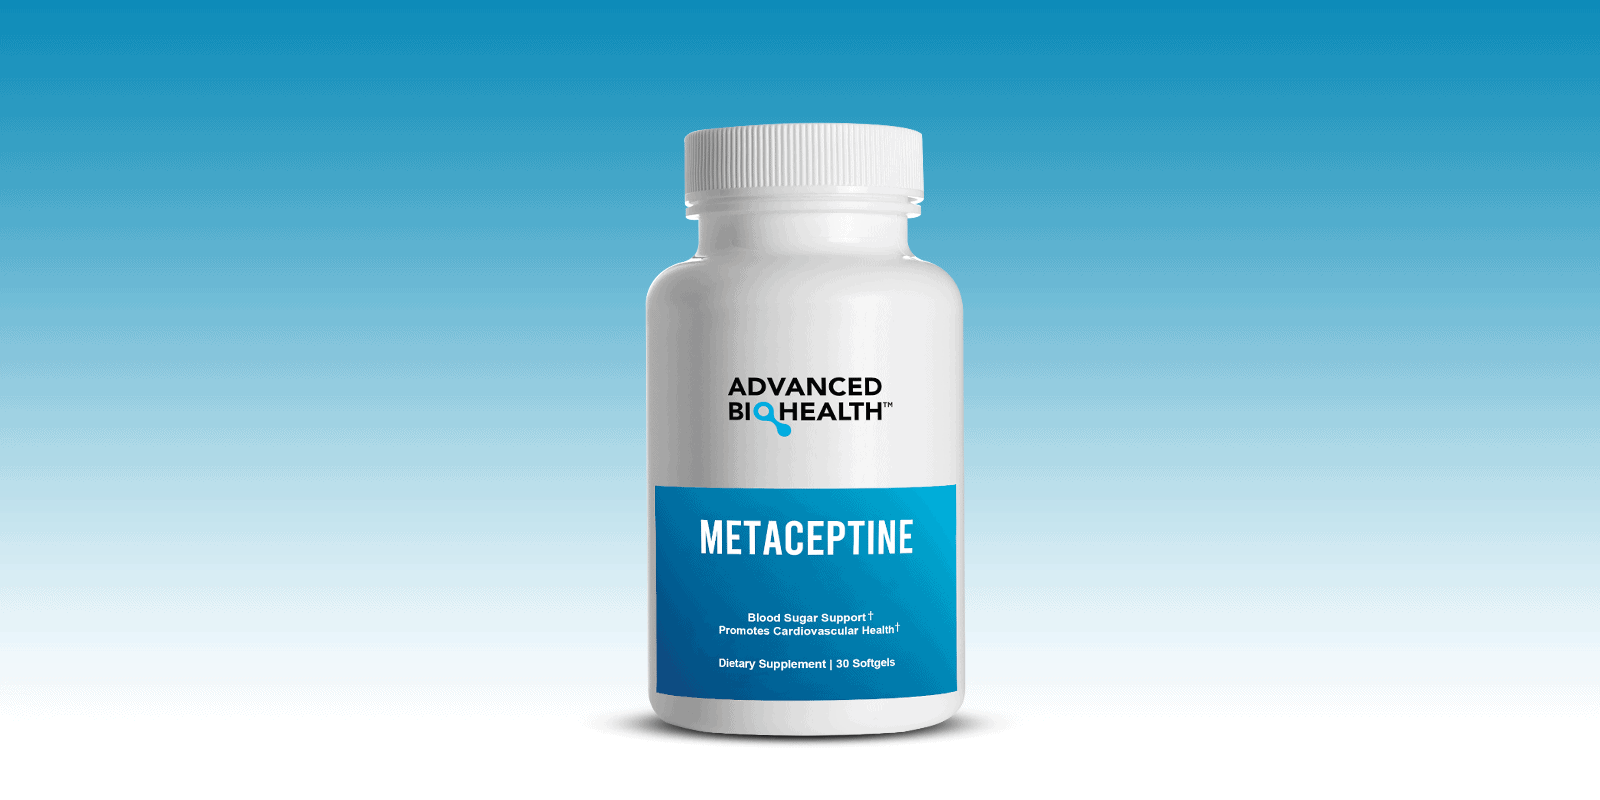 Metaceptine Reviews